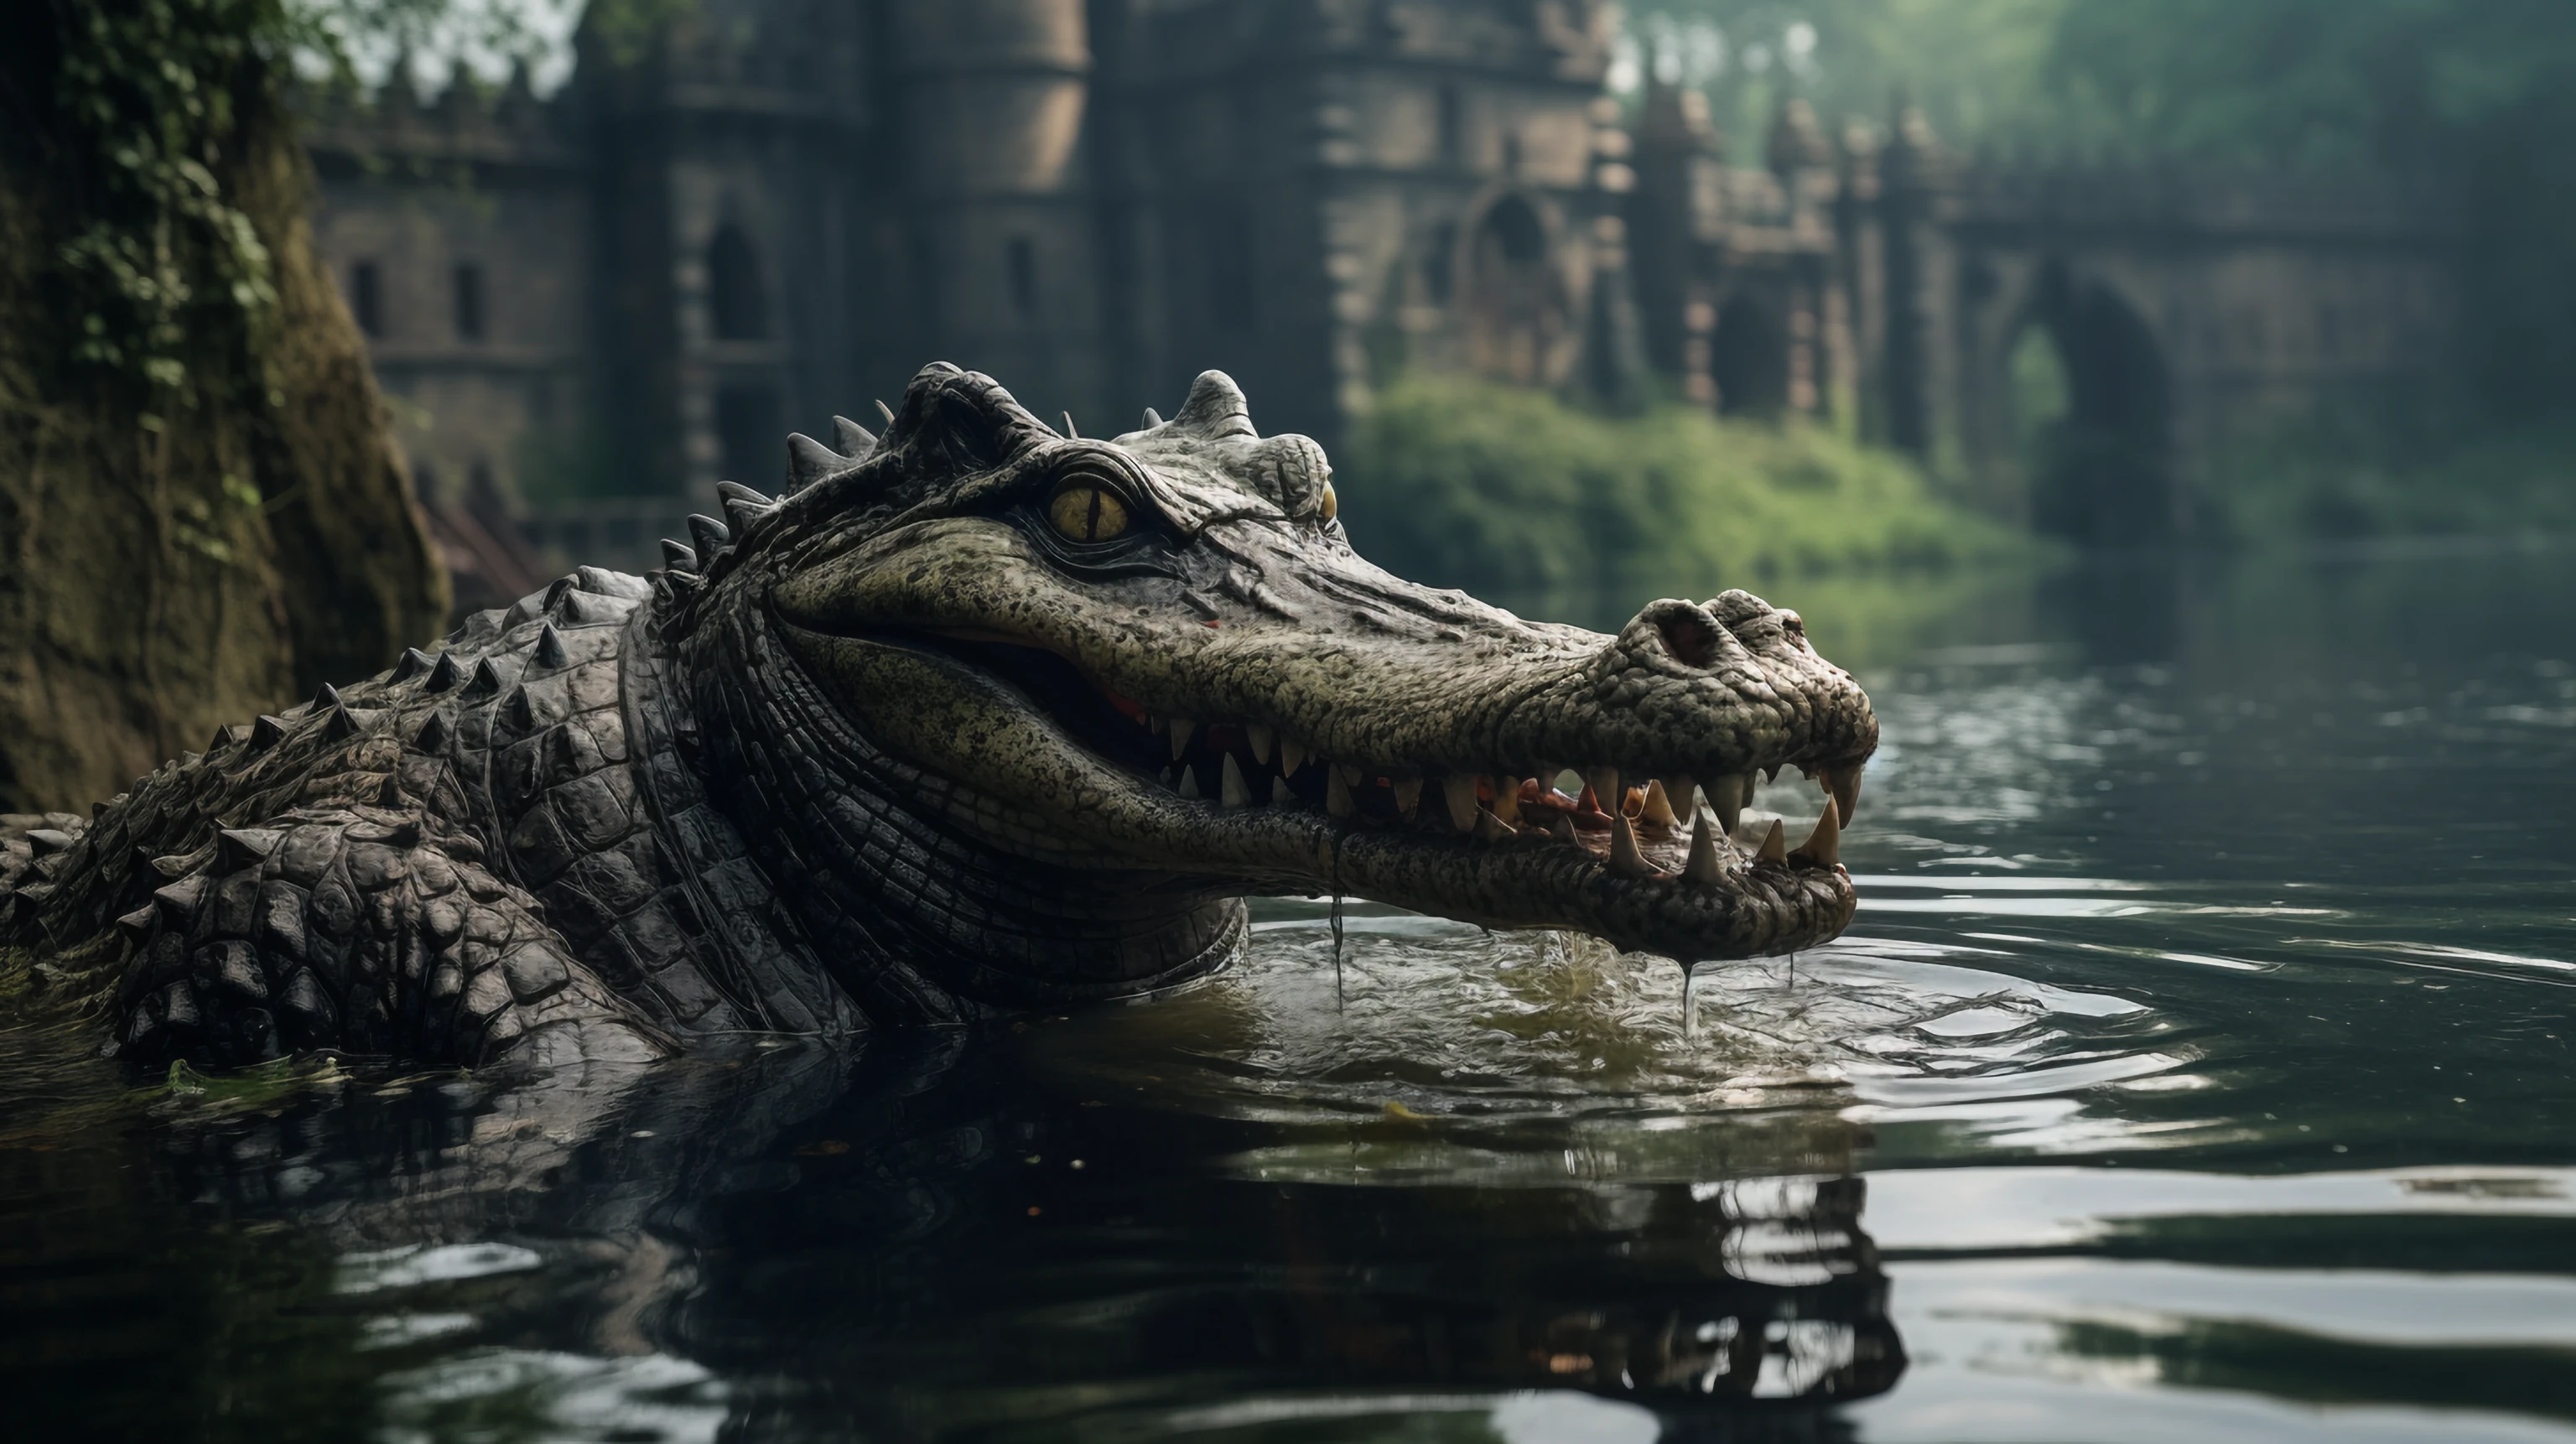 Moat alligator